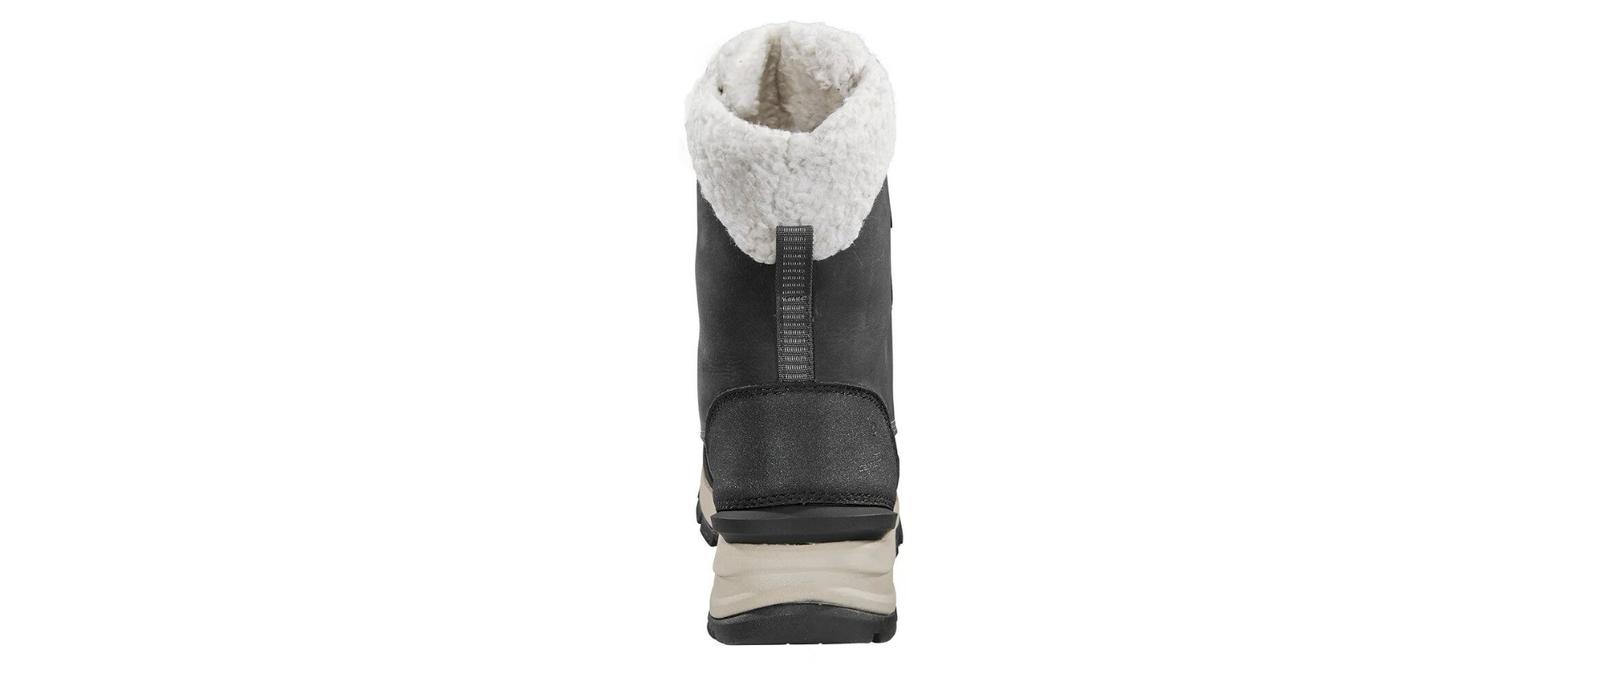 Carhartt Women's Pellston Waterproof Insulated Winter Boot 